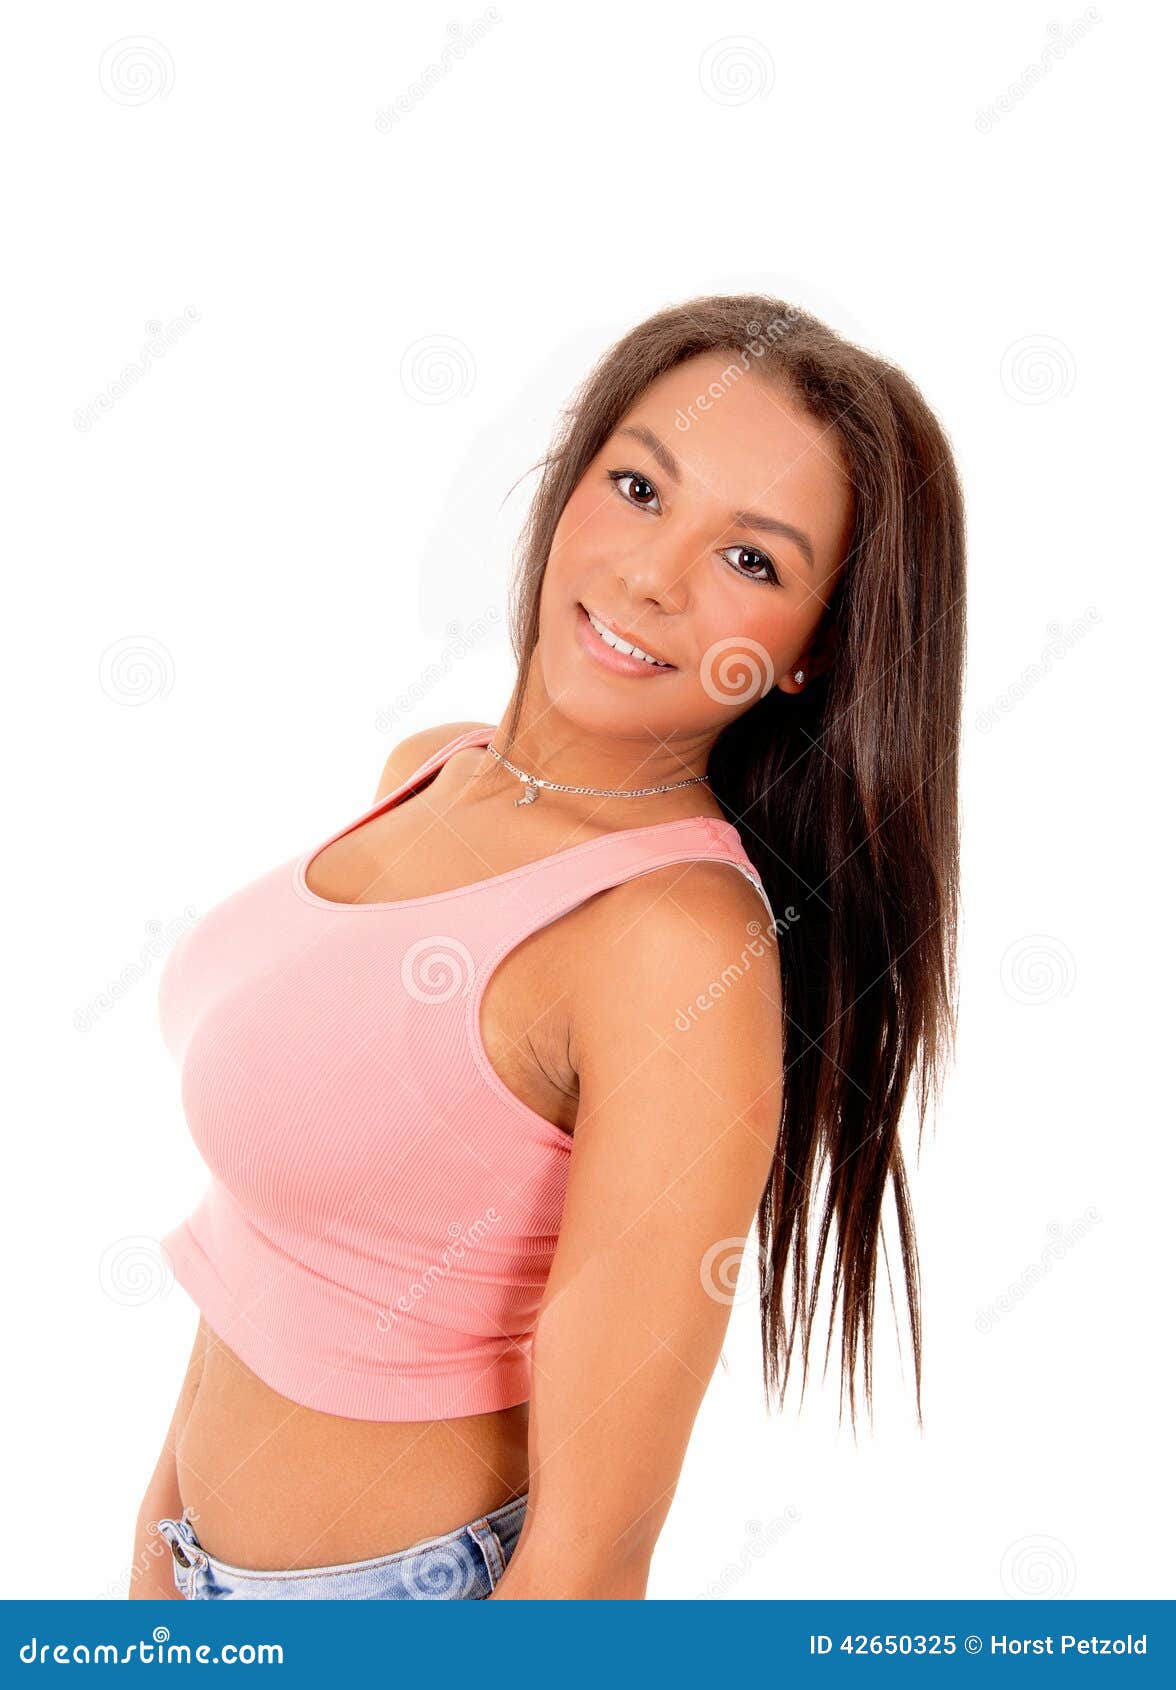 Model young teen girl bent over